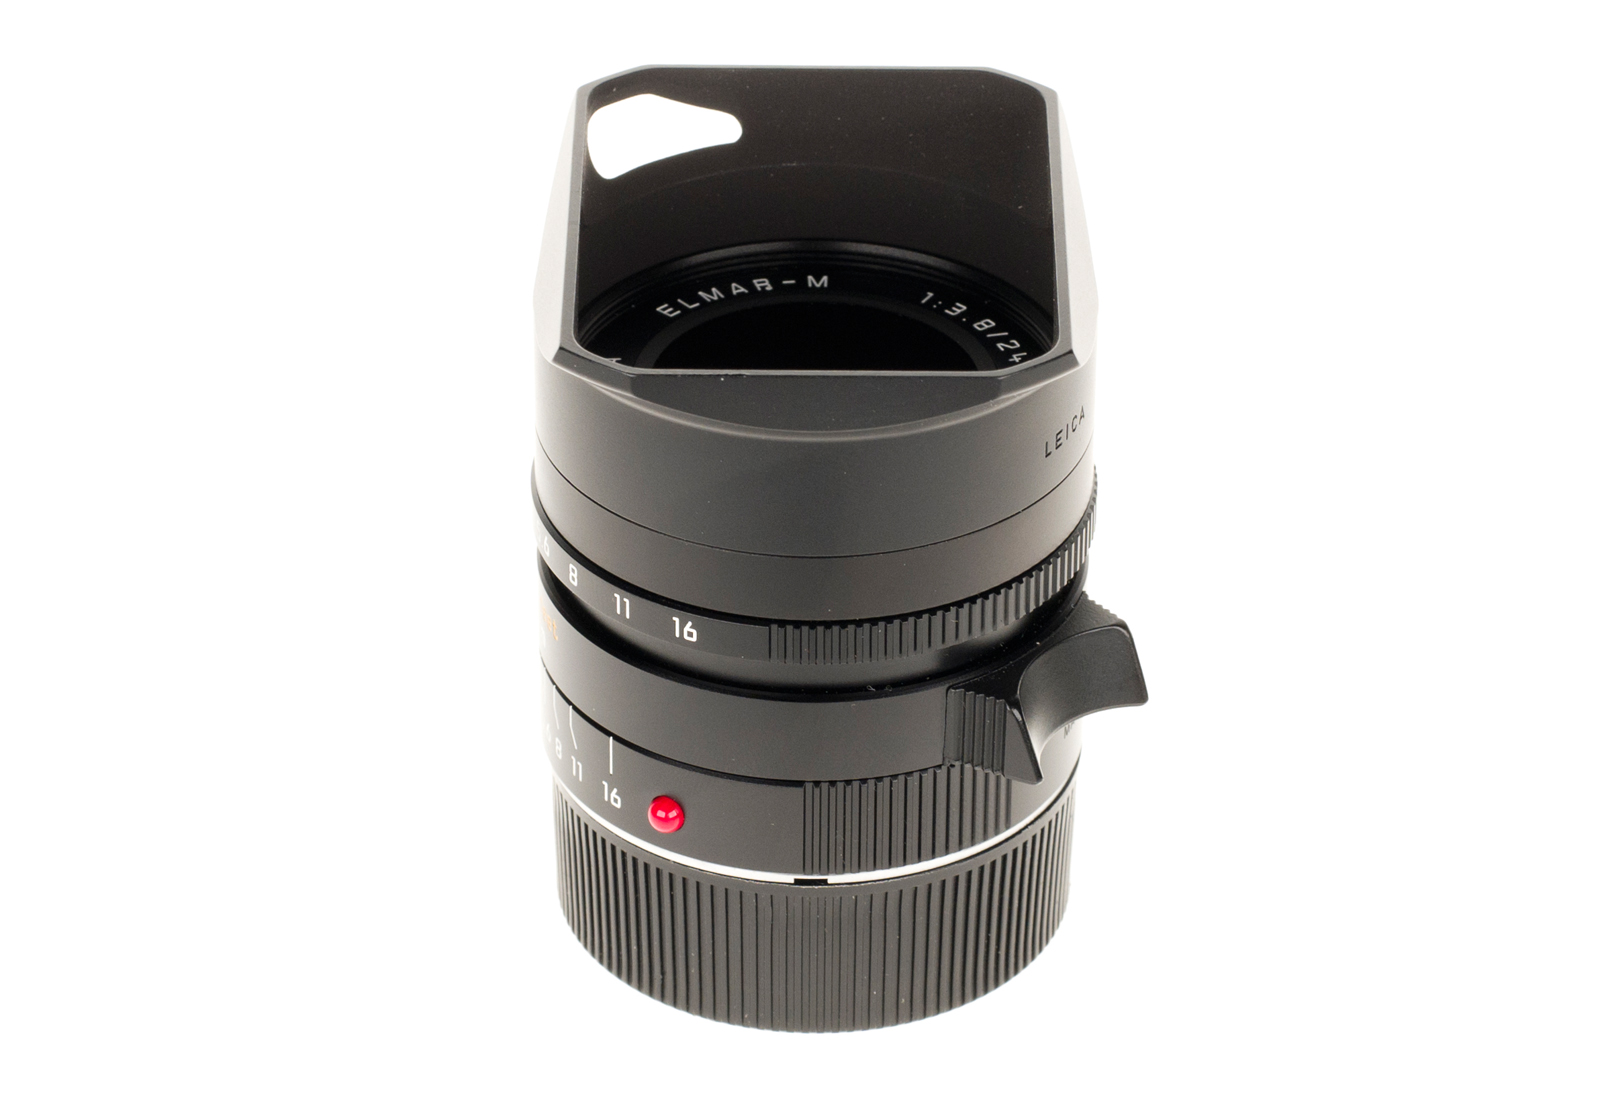 Leica Elmar-M 1:3.8/24mm ASPH., 6-Bit, + 24mm Viewfinder